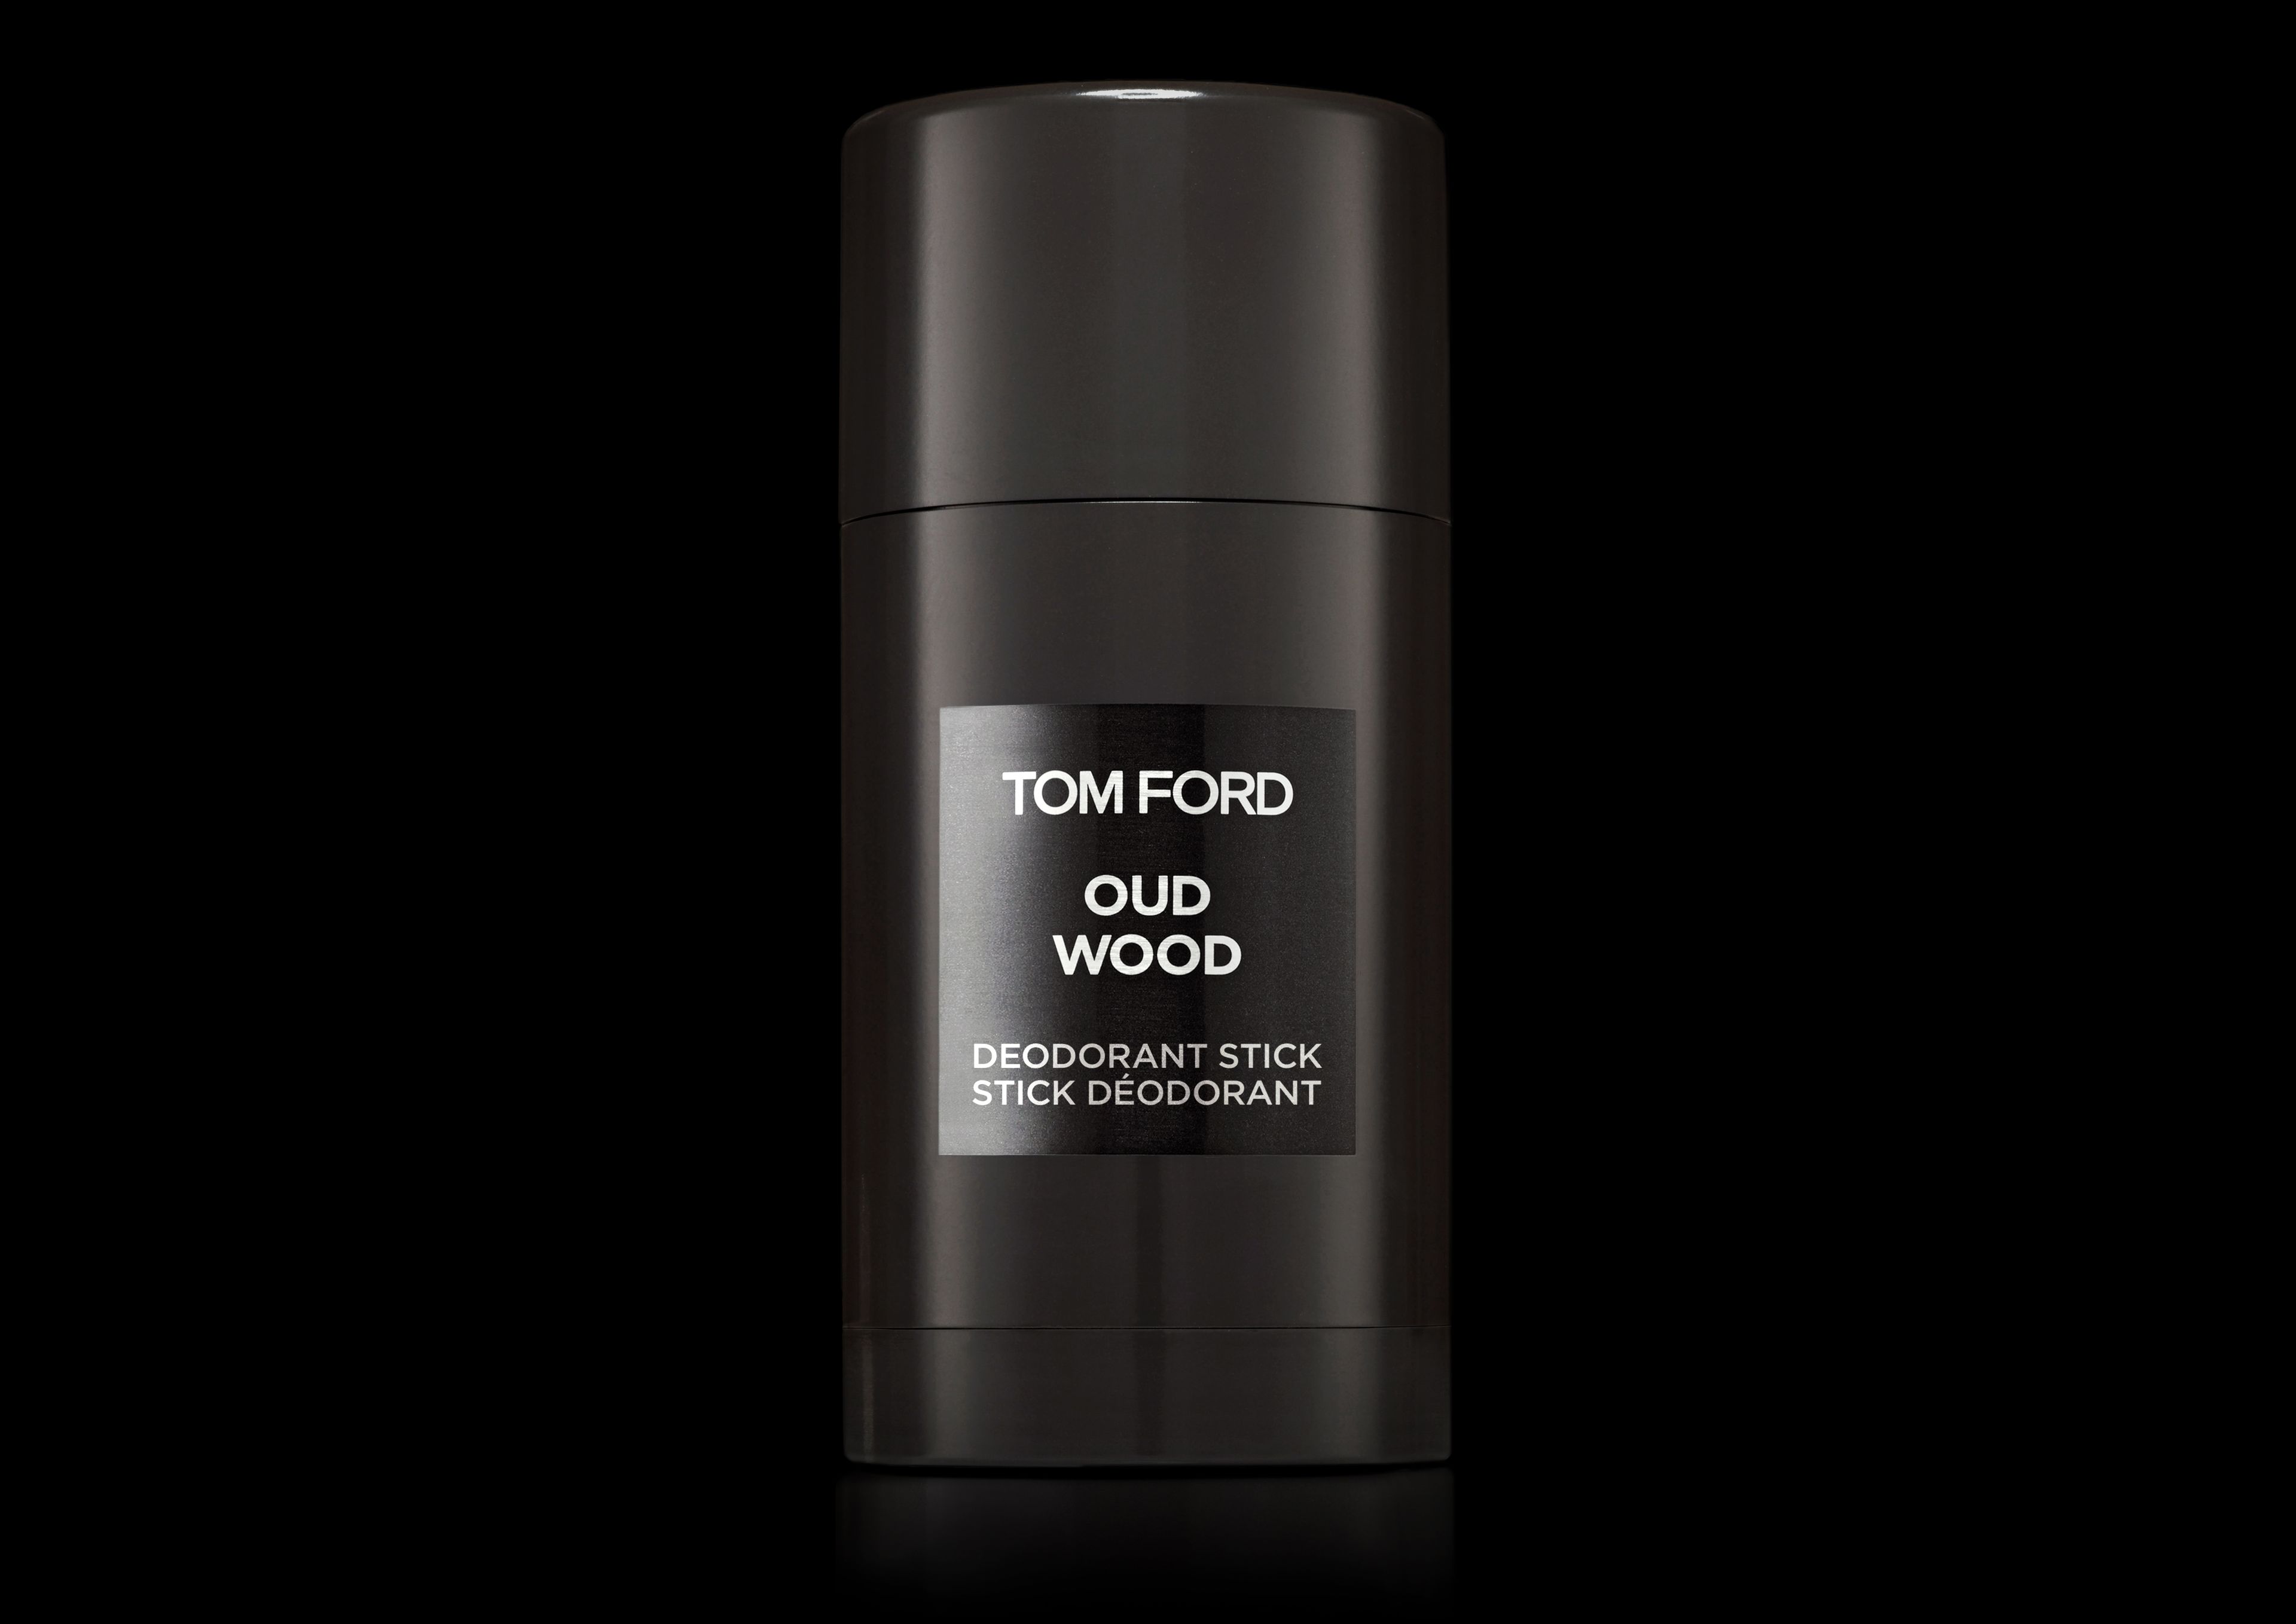 Tom Ford Oud Wood Deodorant Stick 1